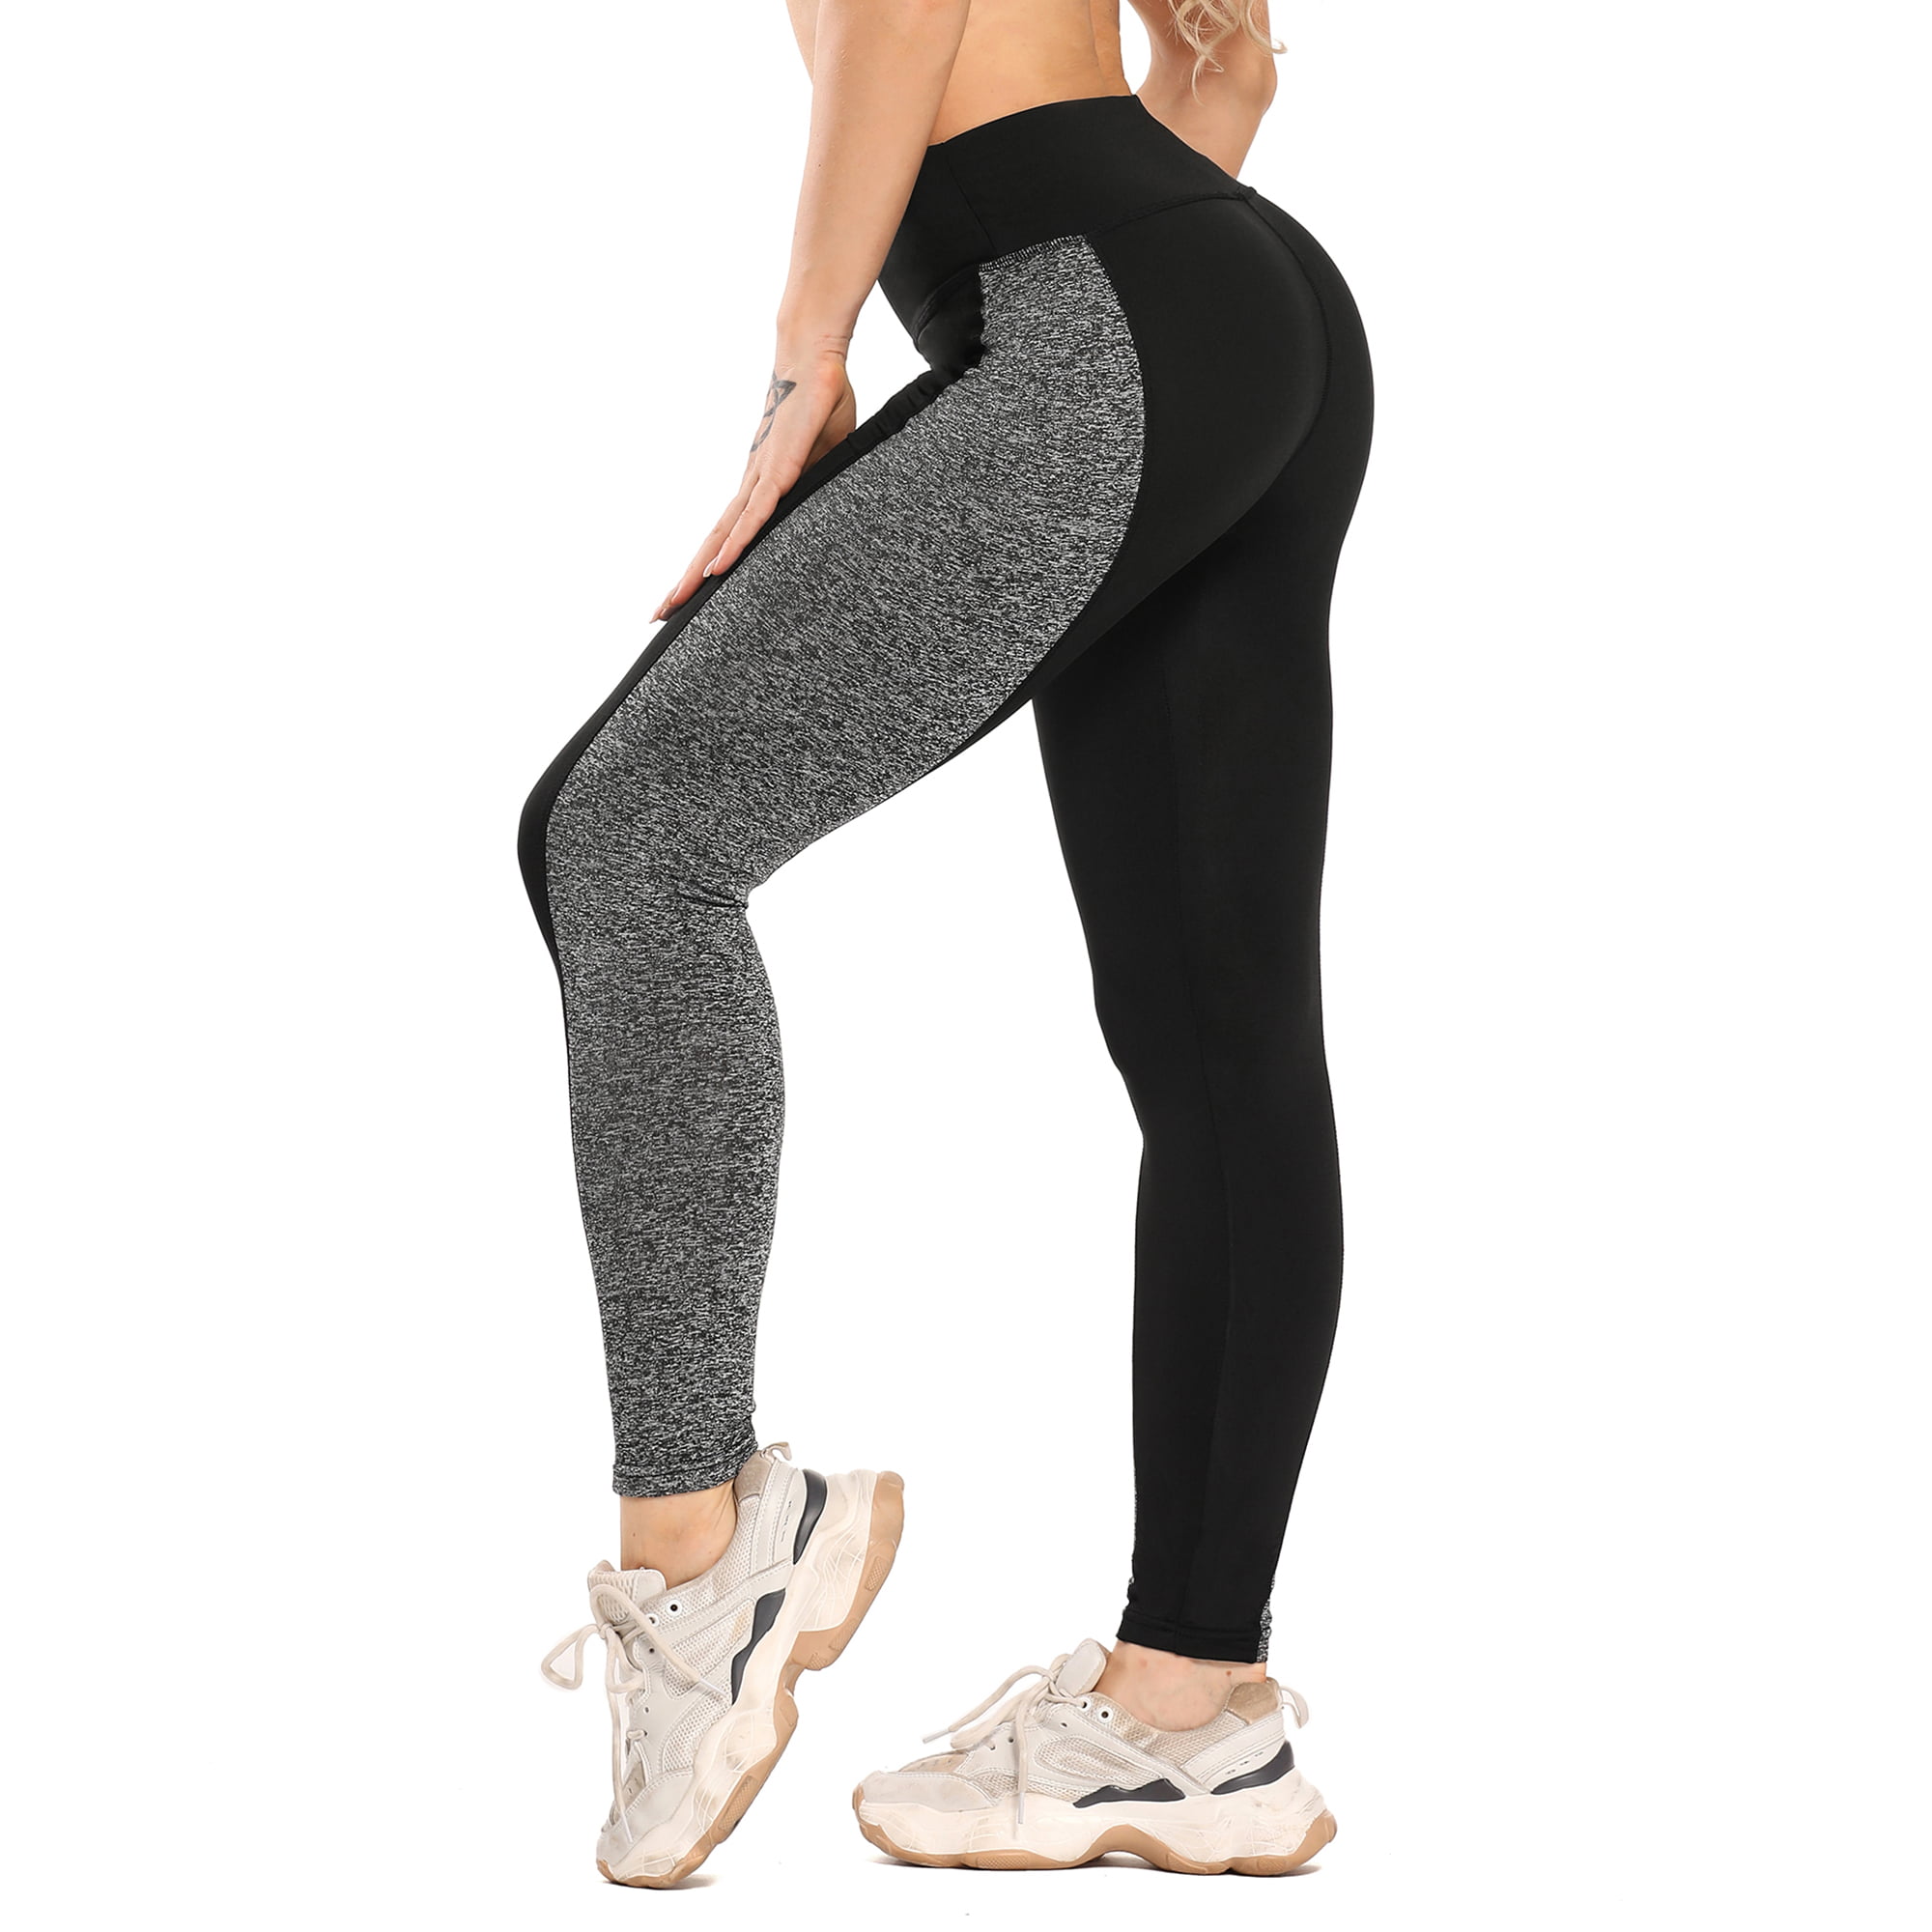 CROSS1946 Lady Yoga Leggings Pockets High Waist Fitness Gym Running Sports Pants 